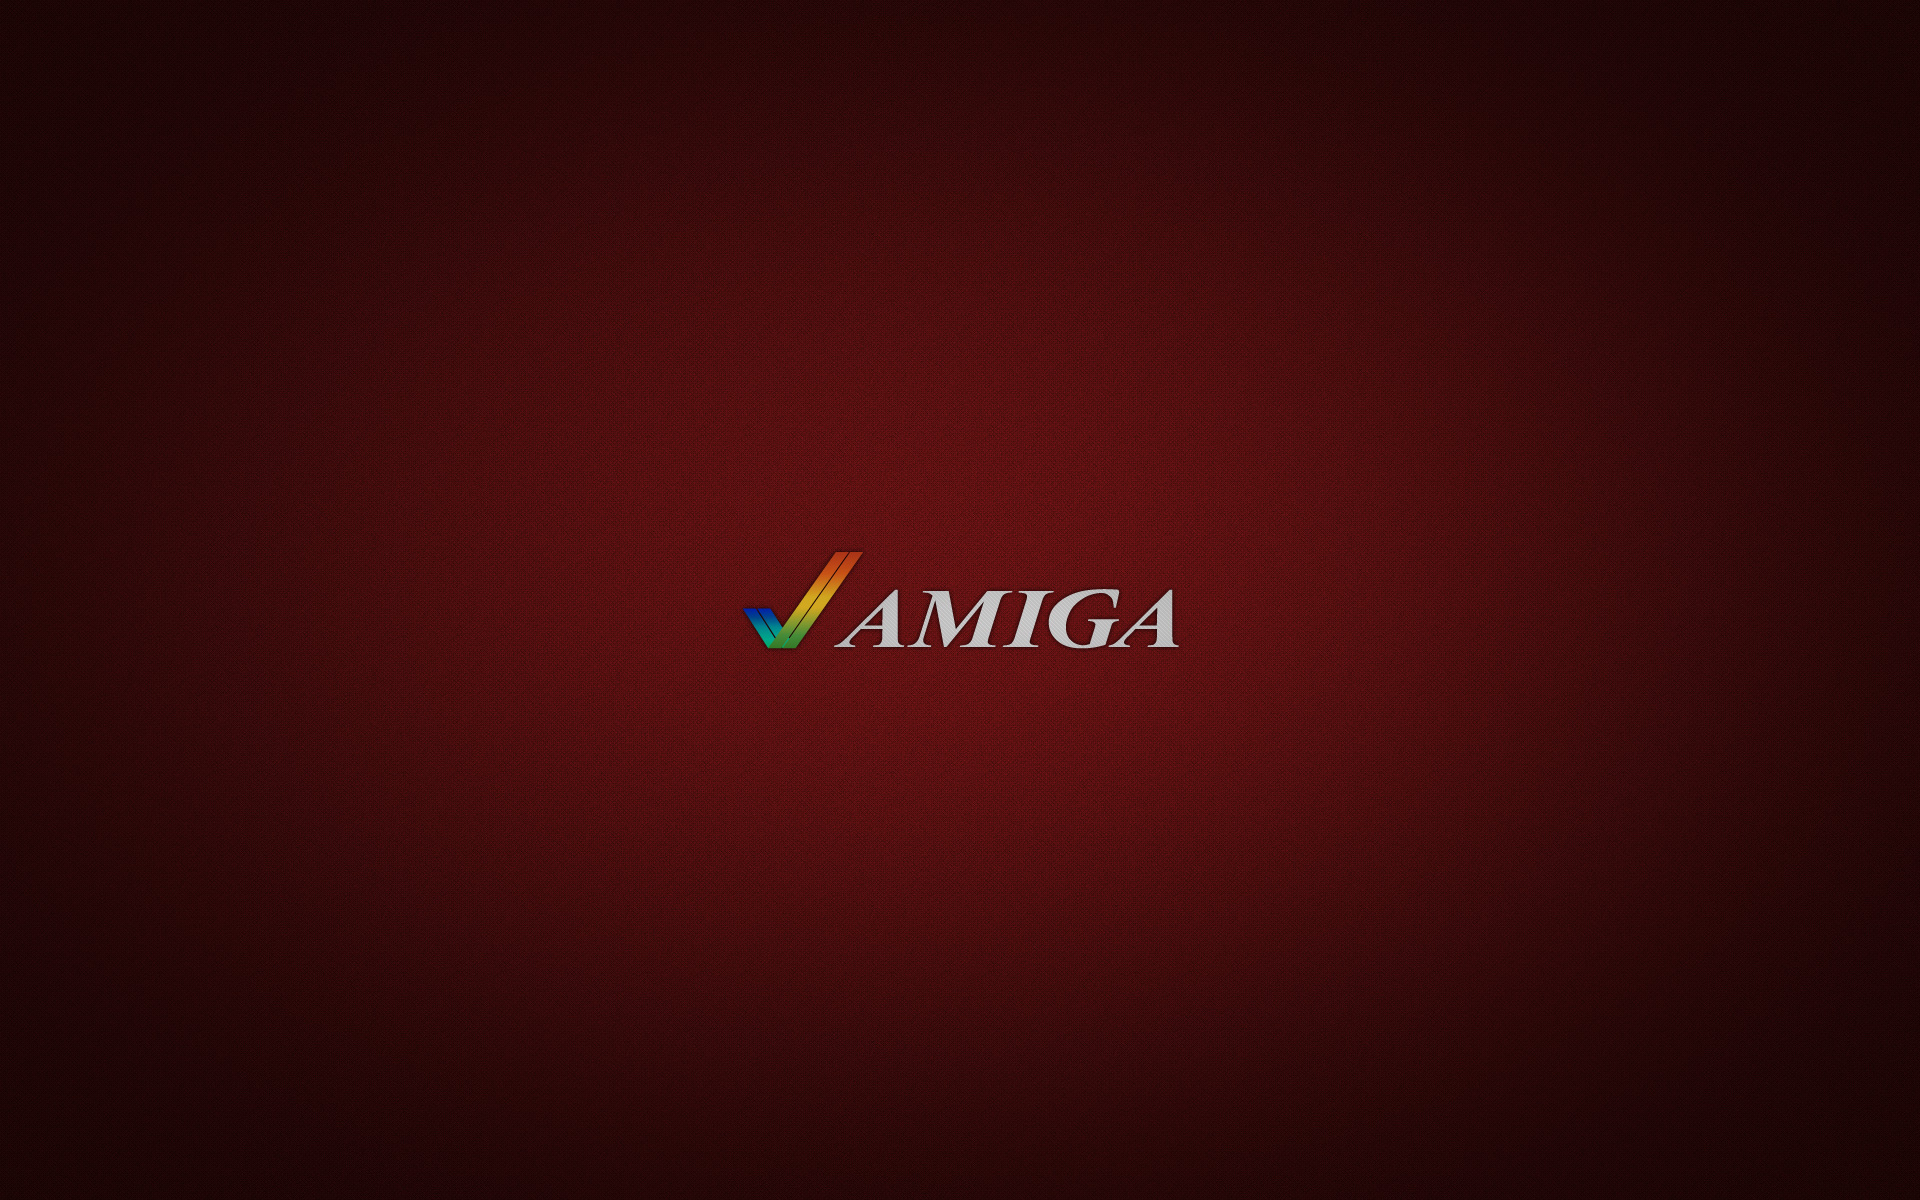 Amiga Logo Red Background By Pixeloza